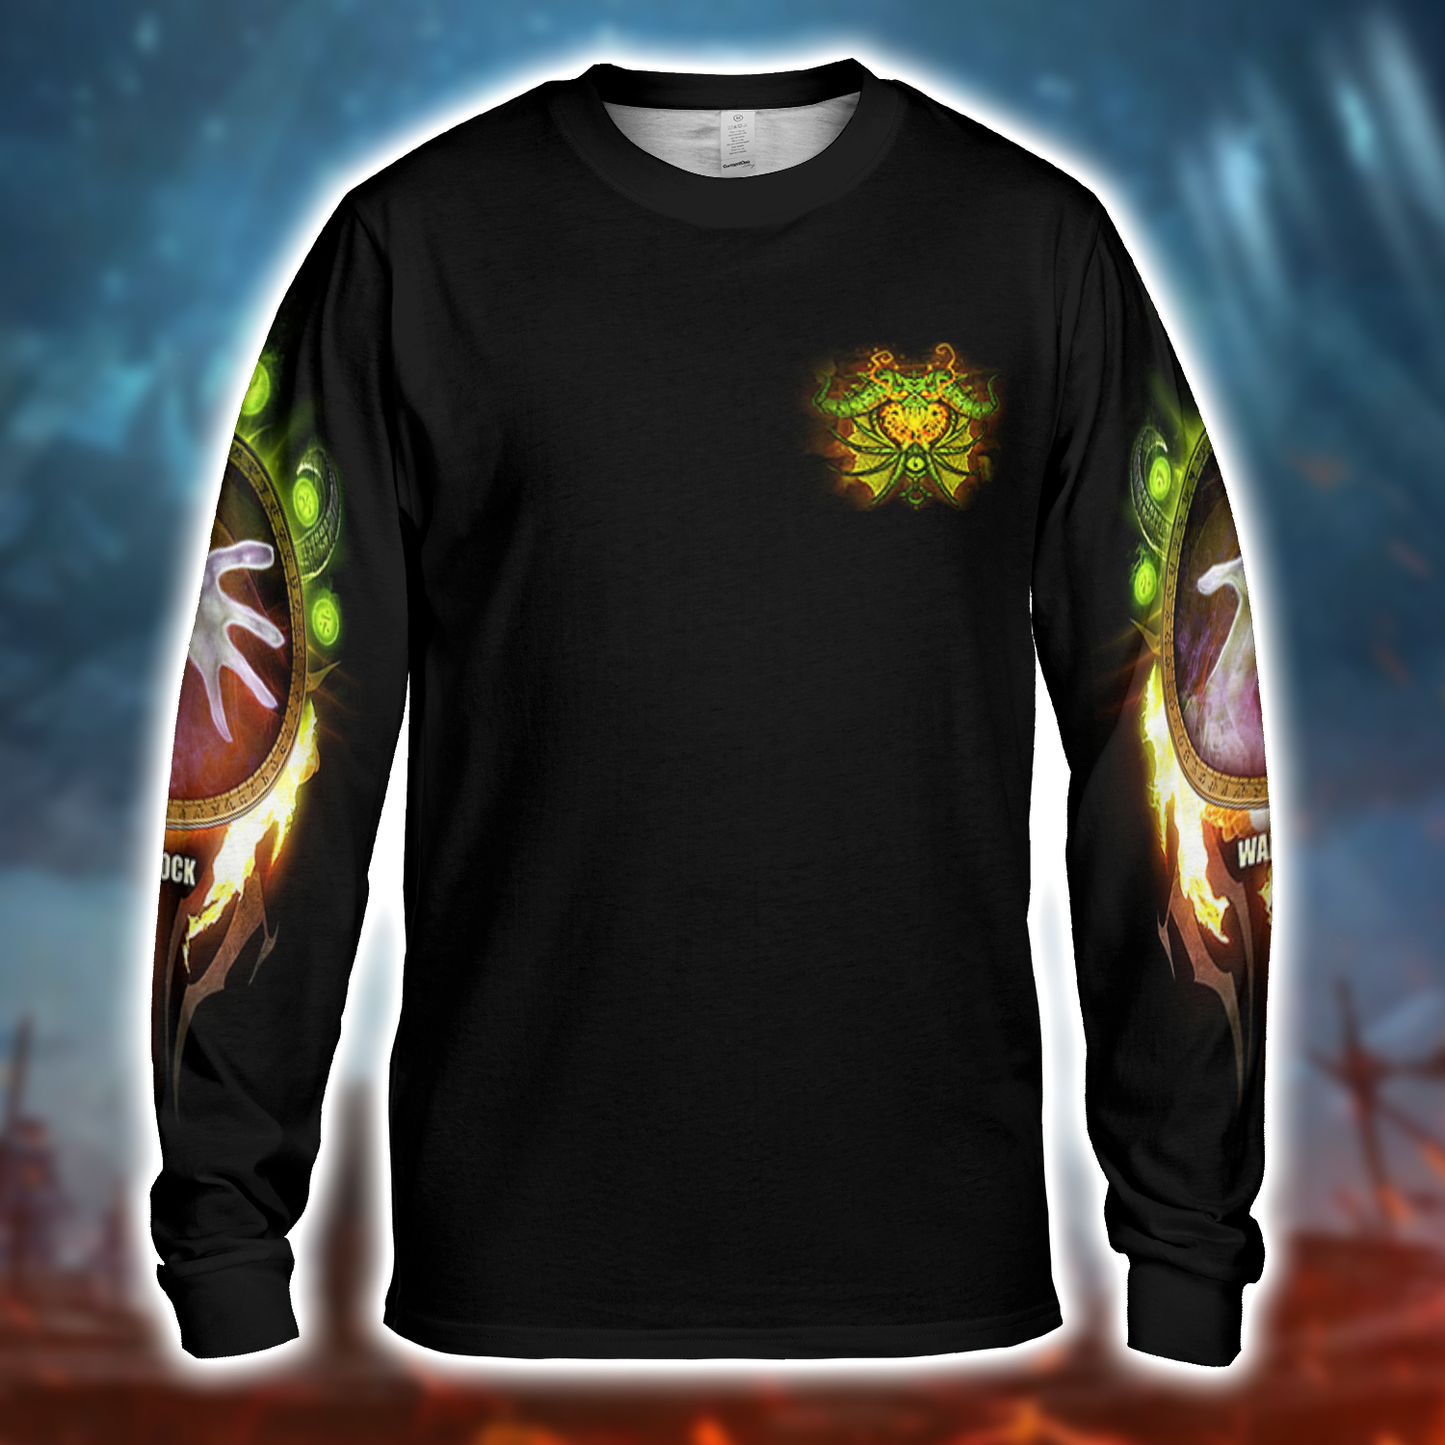 warlock class wow collector's edition AOP Long Sleeve Shirt